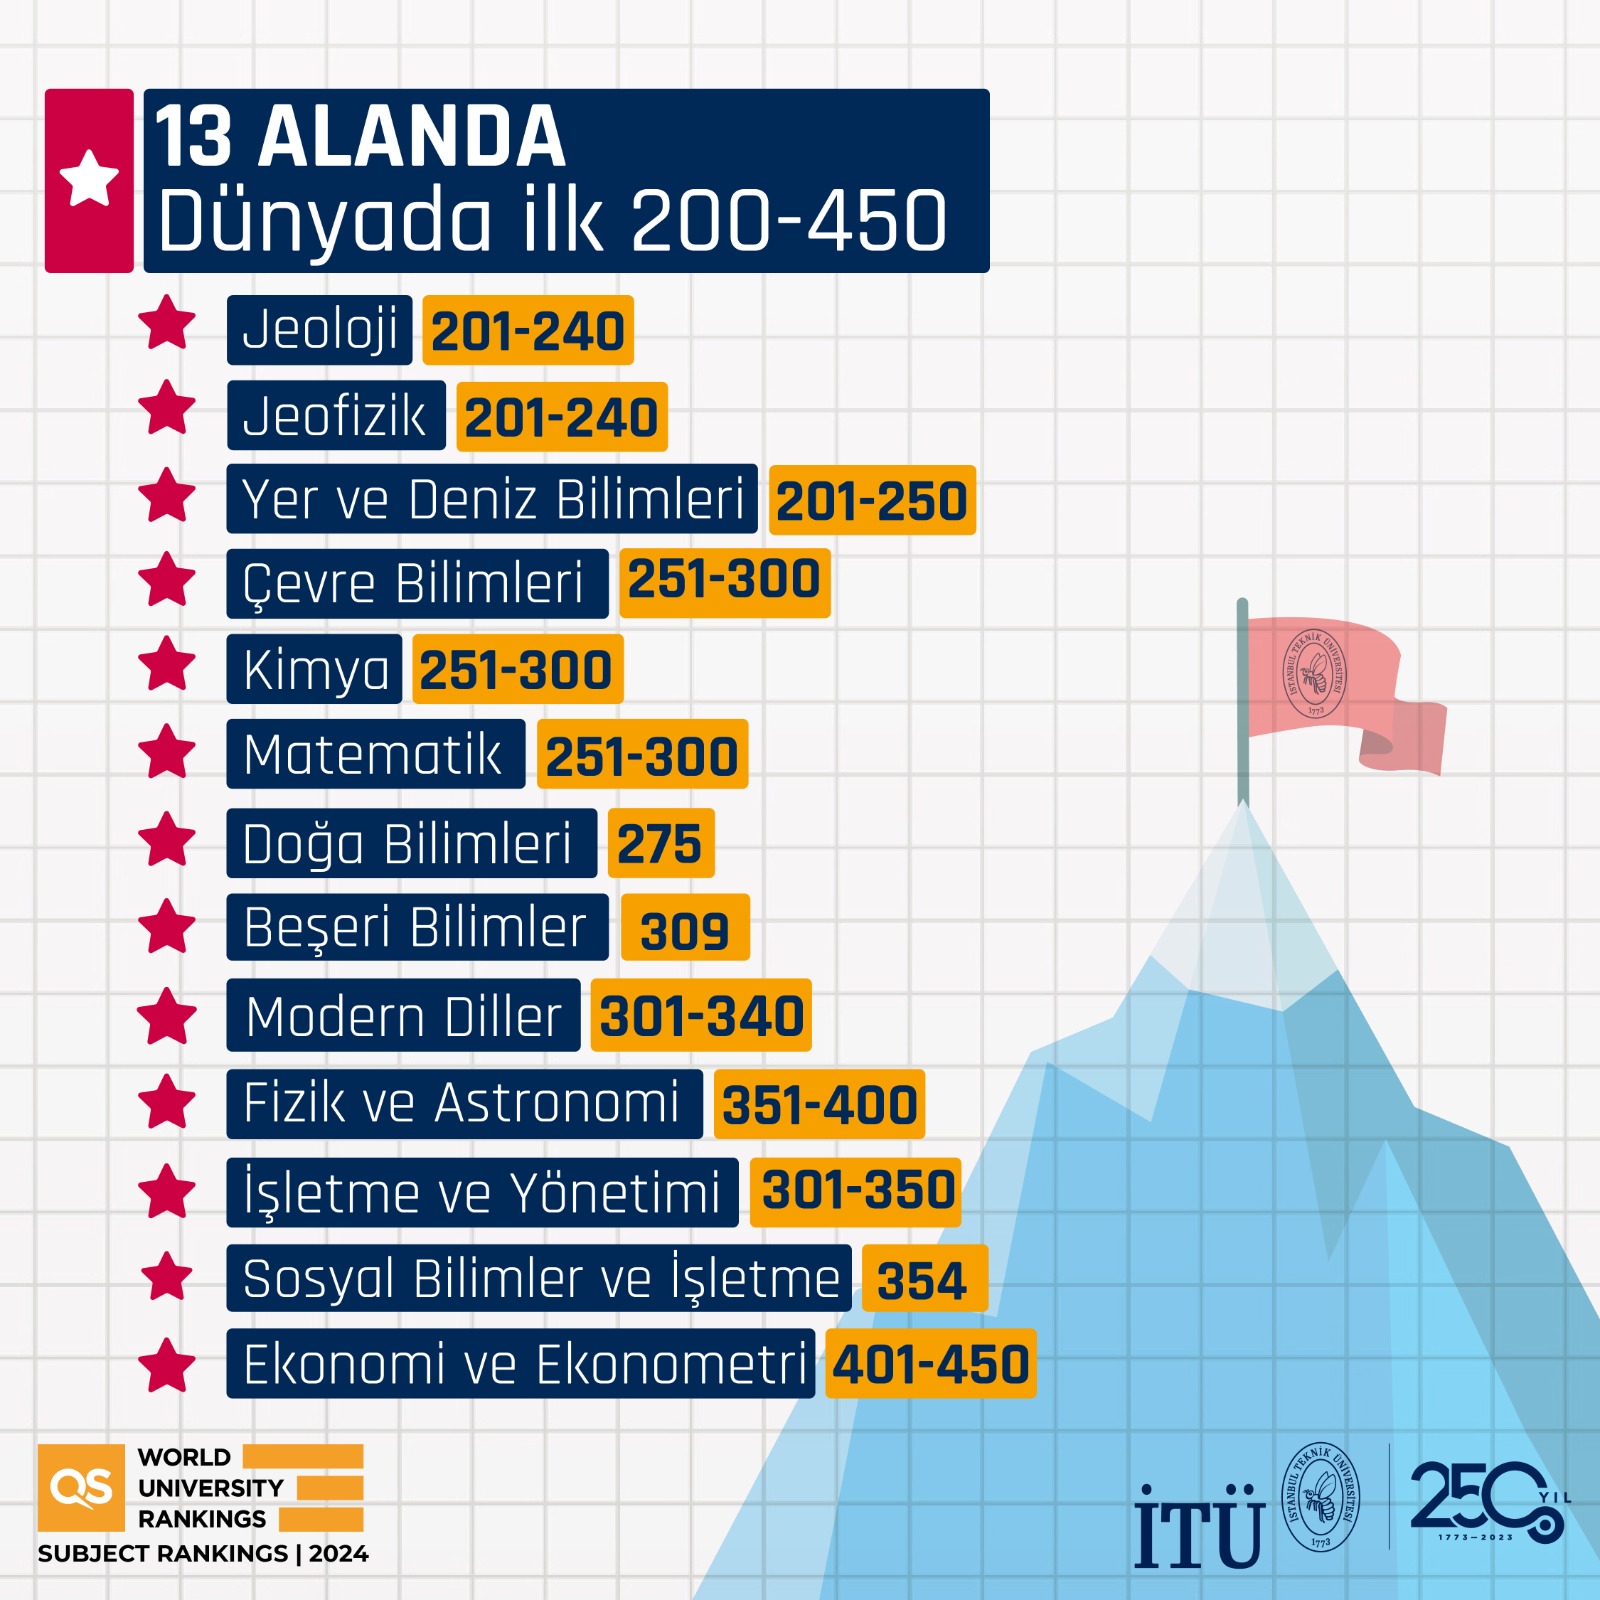 13-alanda-zirvede-qs-2024-subject